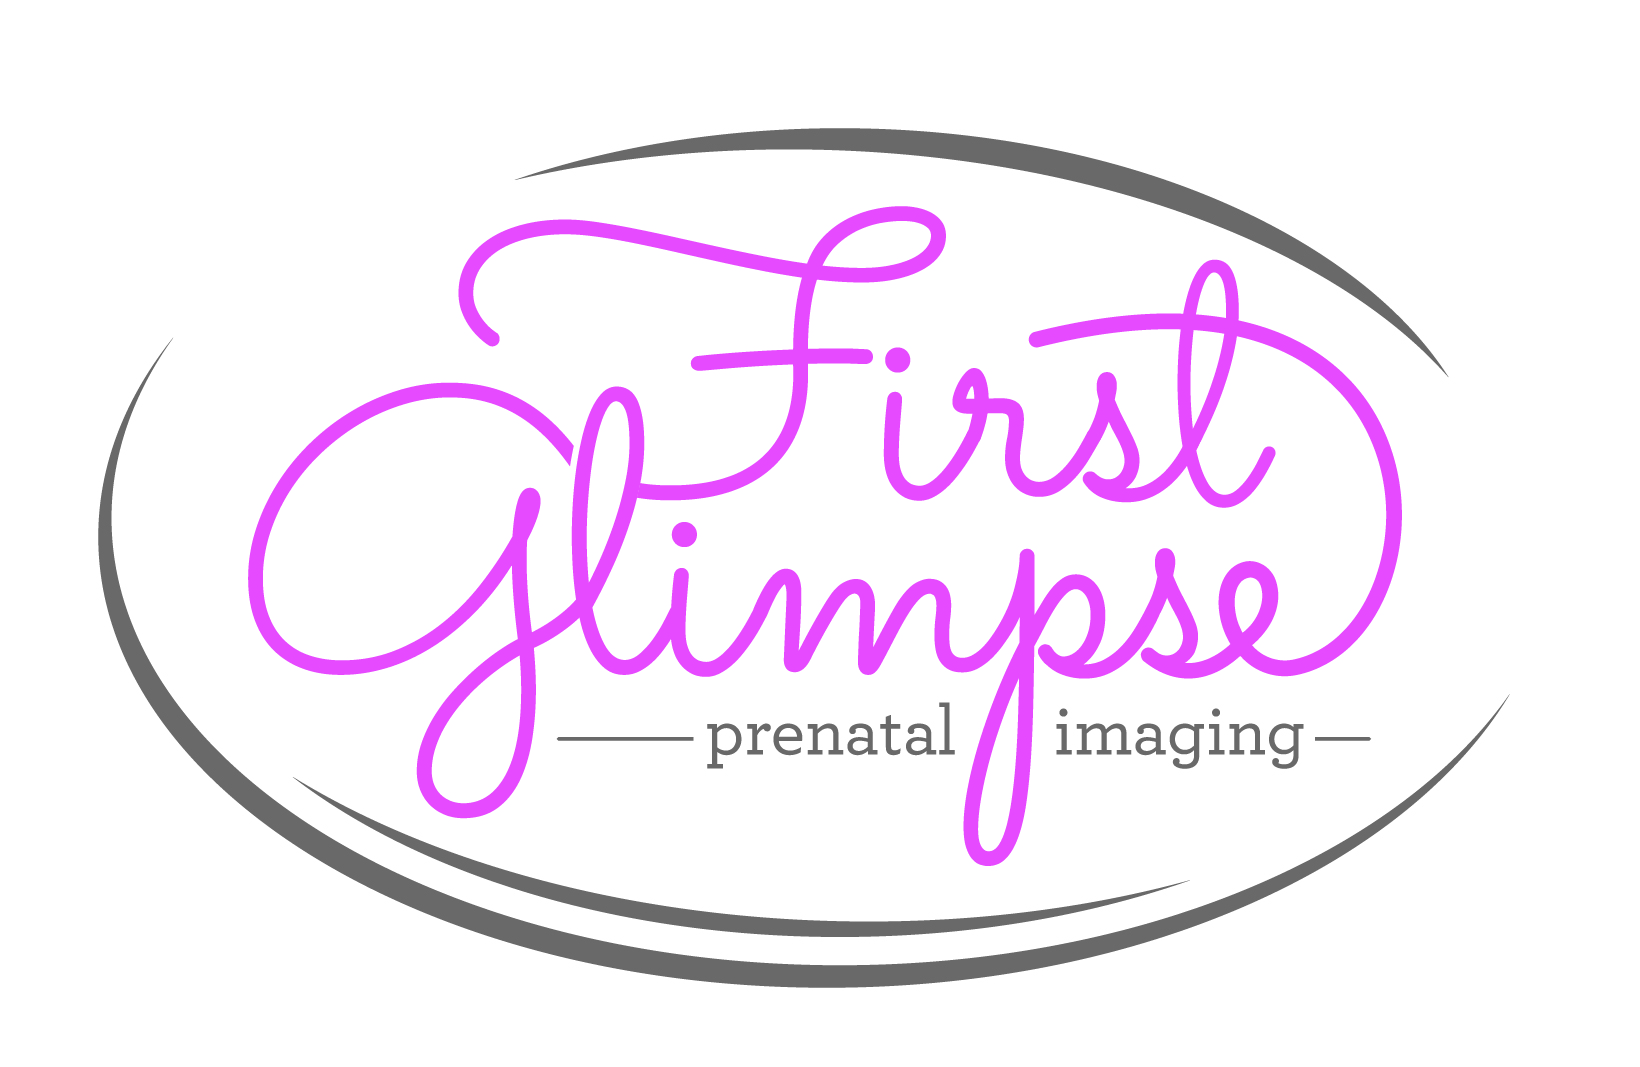 First Glimpse Prenatal Imaging